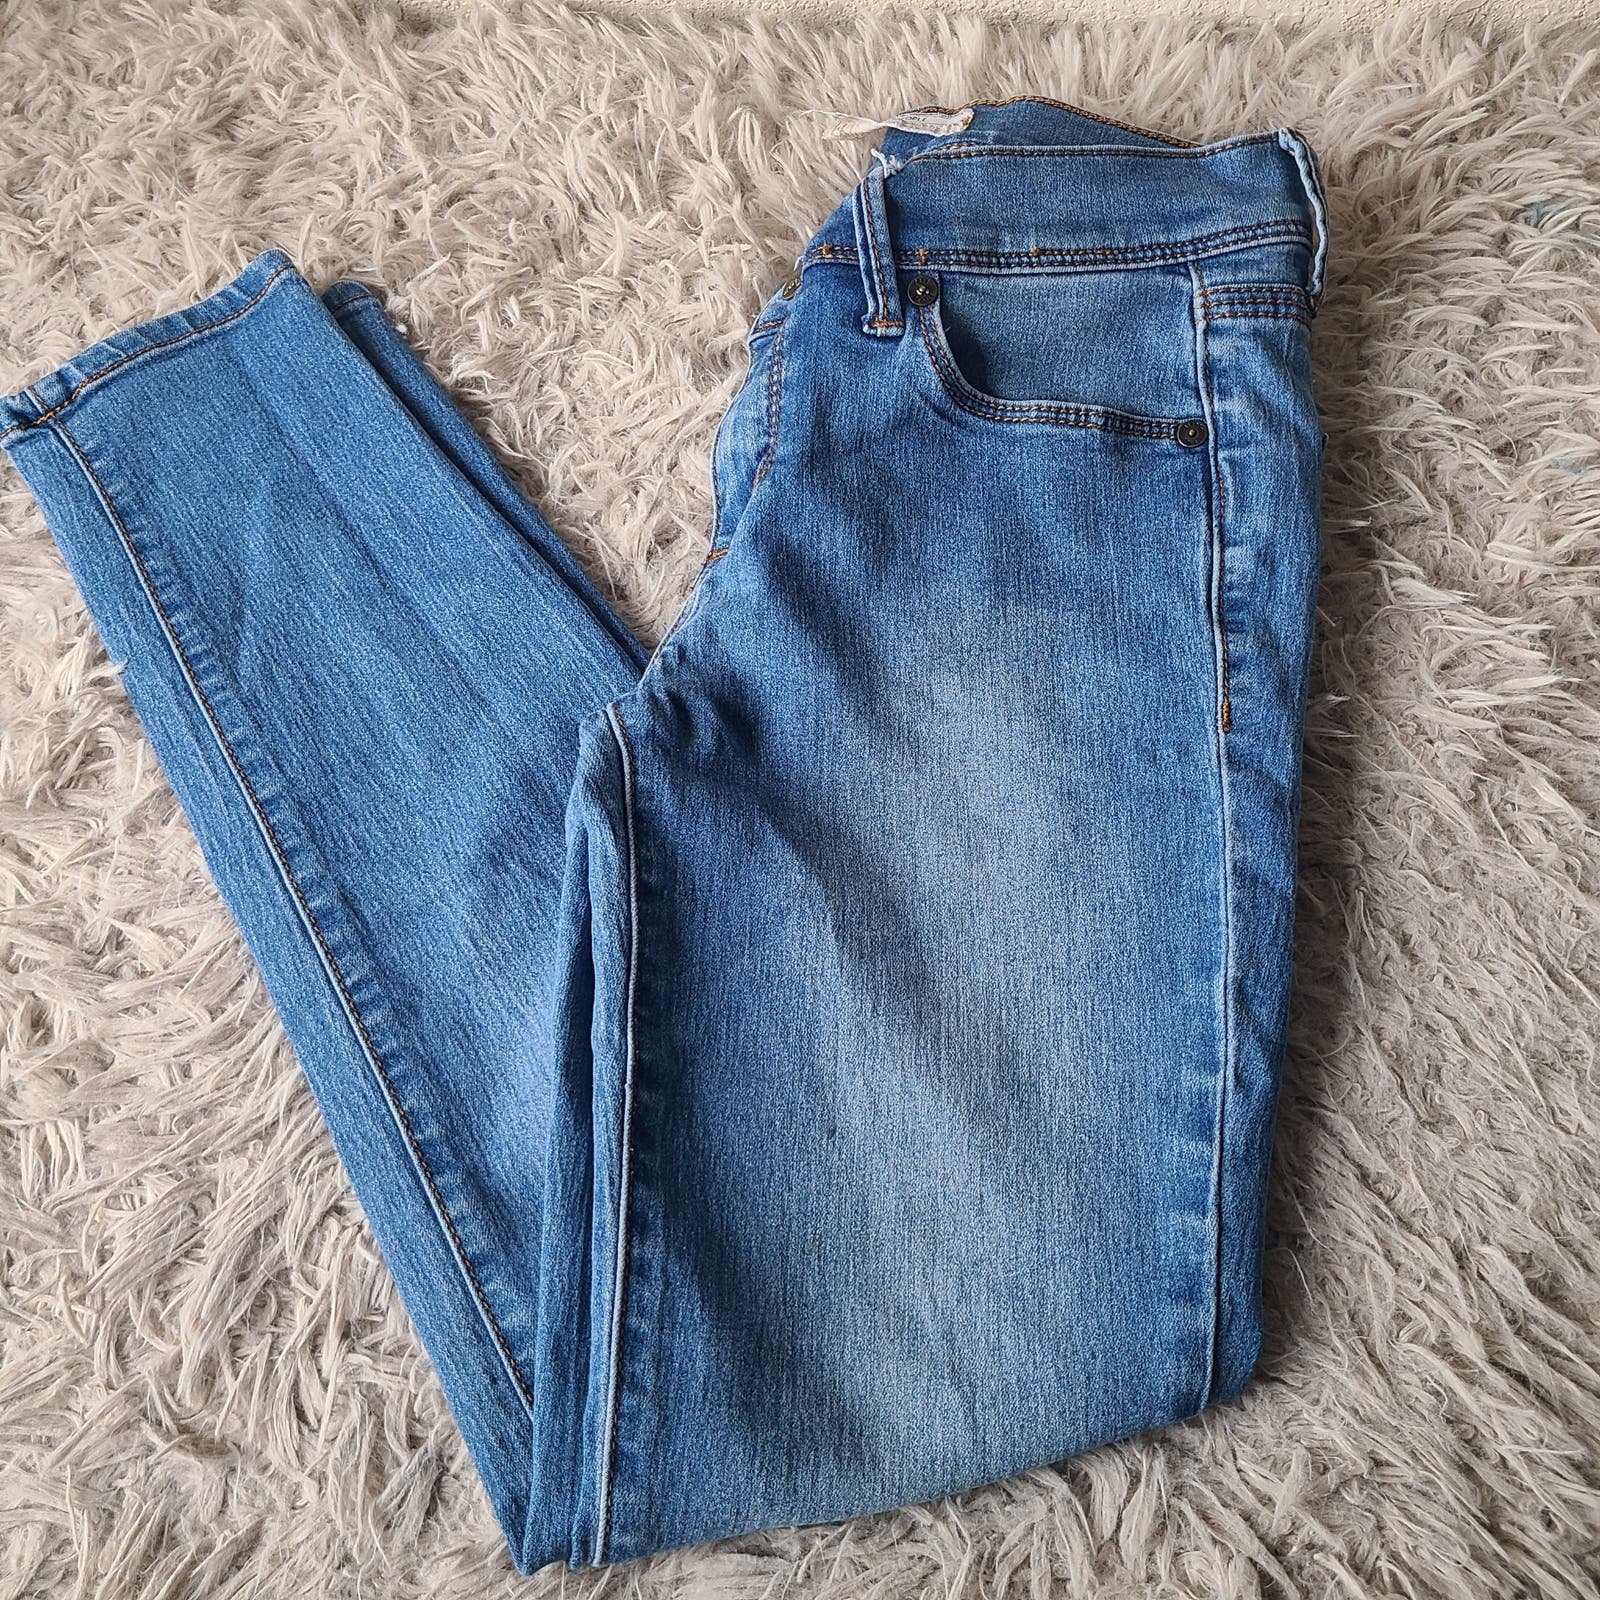 Fashion Free People Denim Skinny Jeans Women´s Size 25 oR8tqJYXu no tax